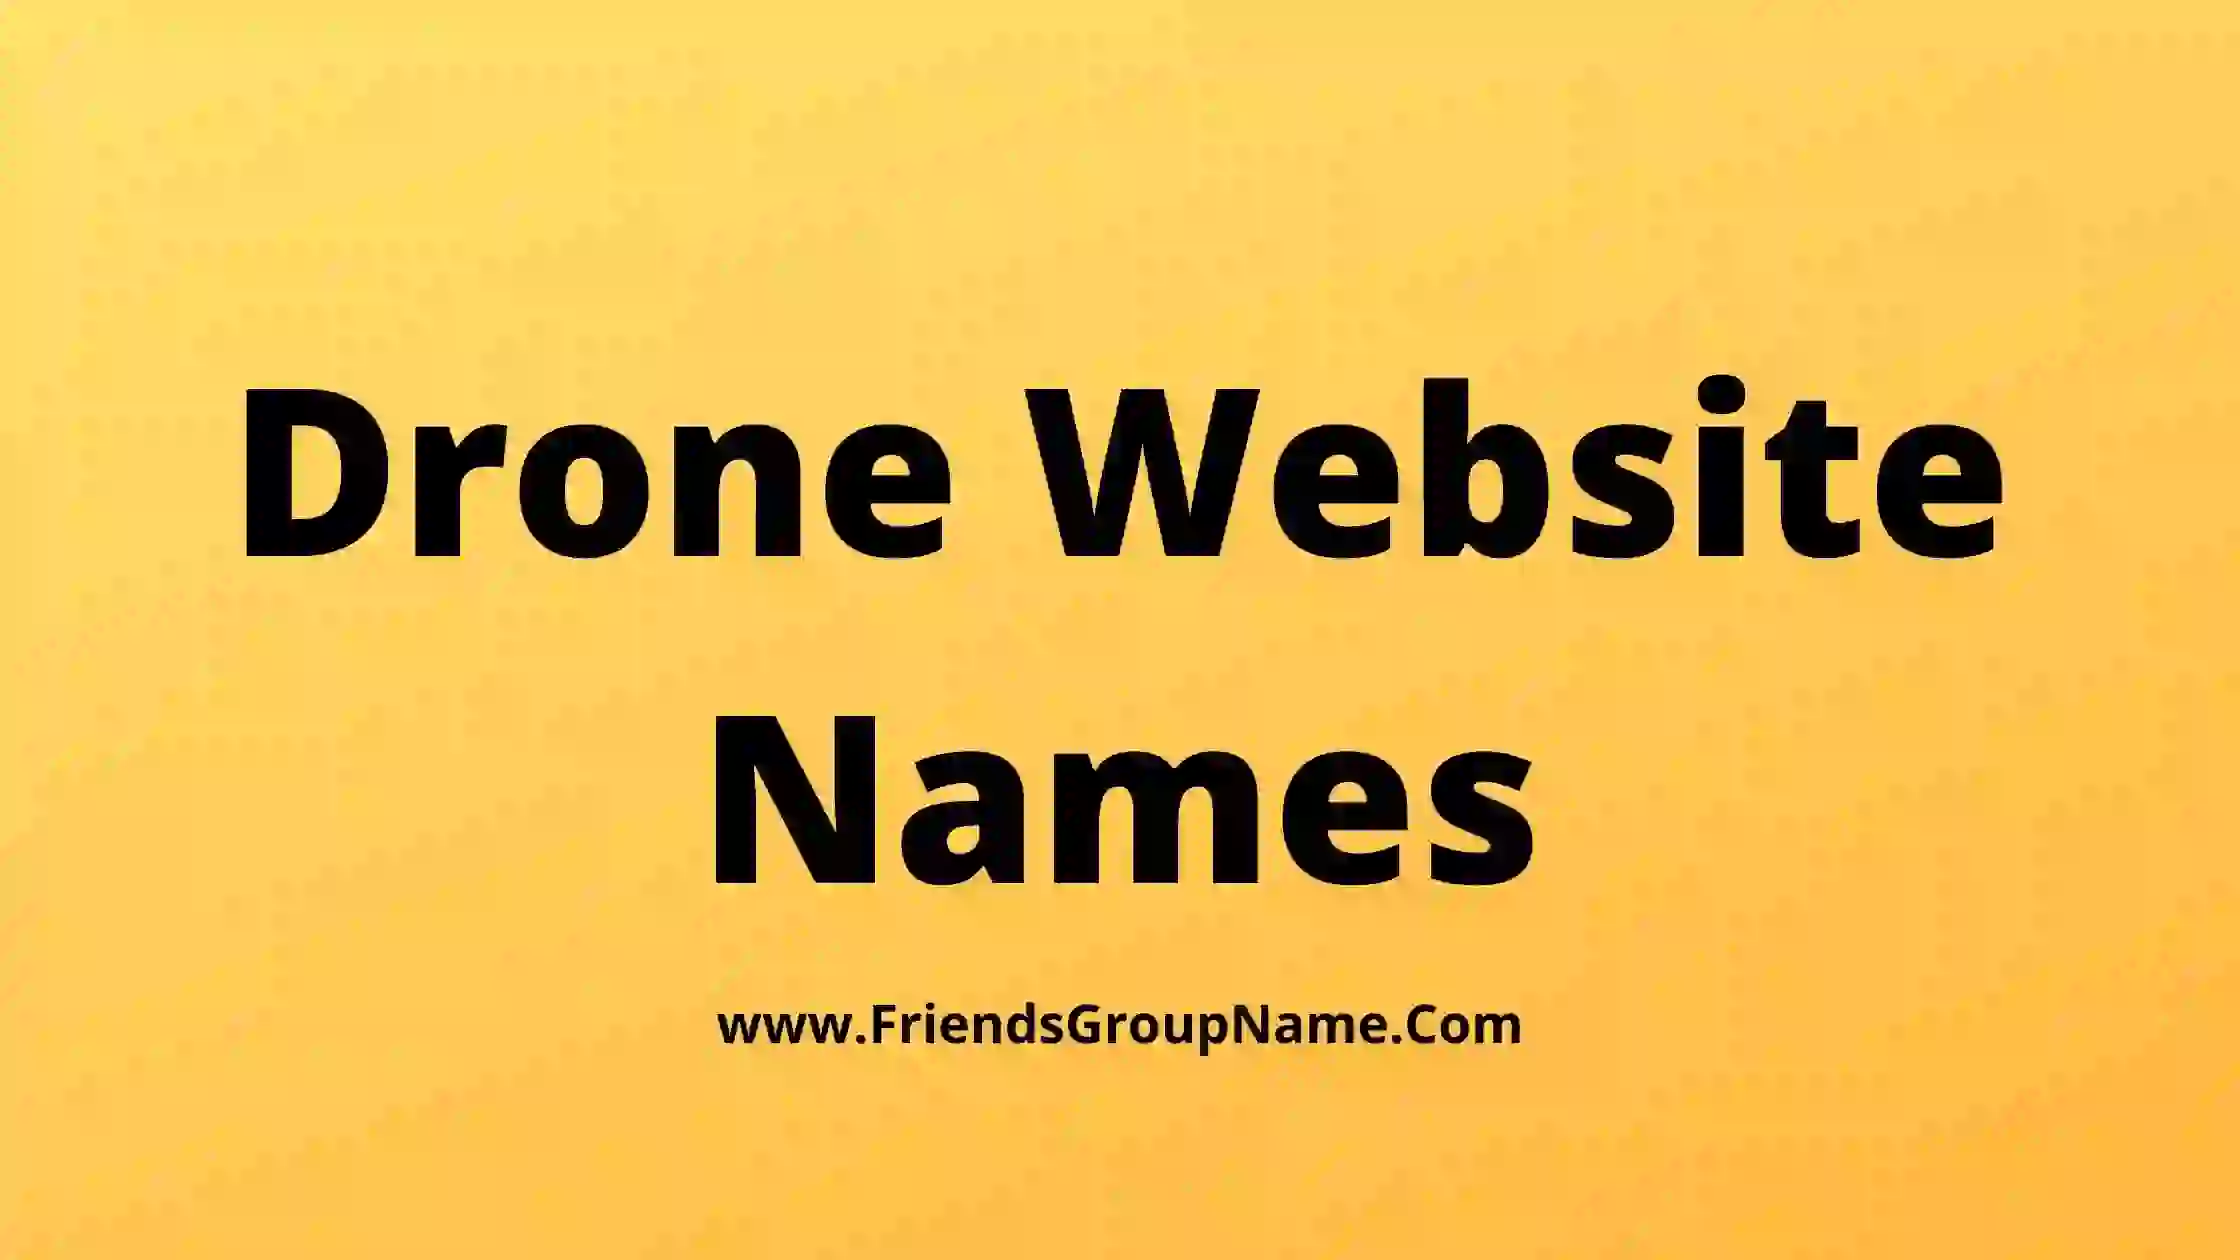 Drone Website Names